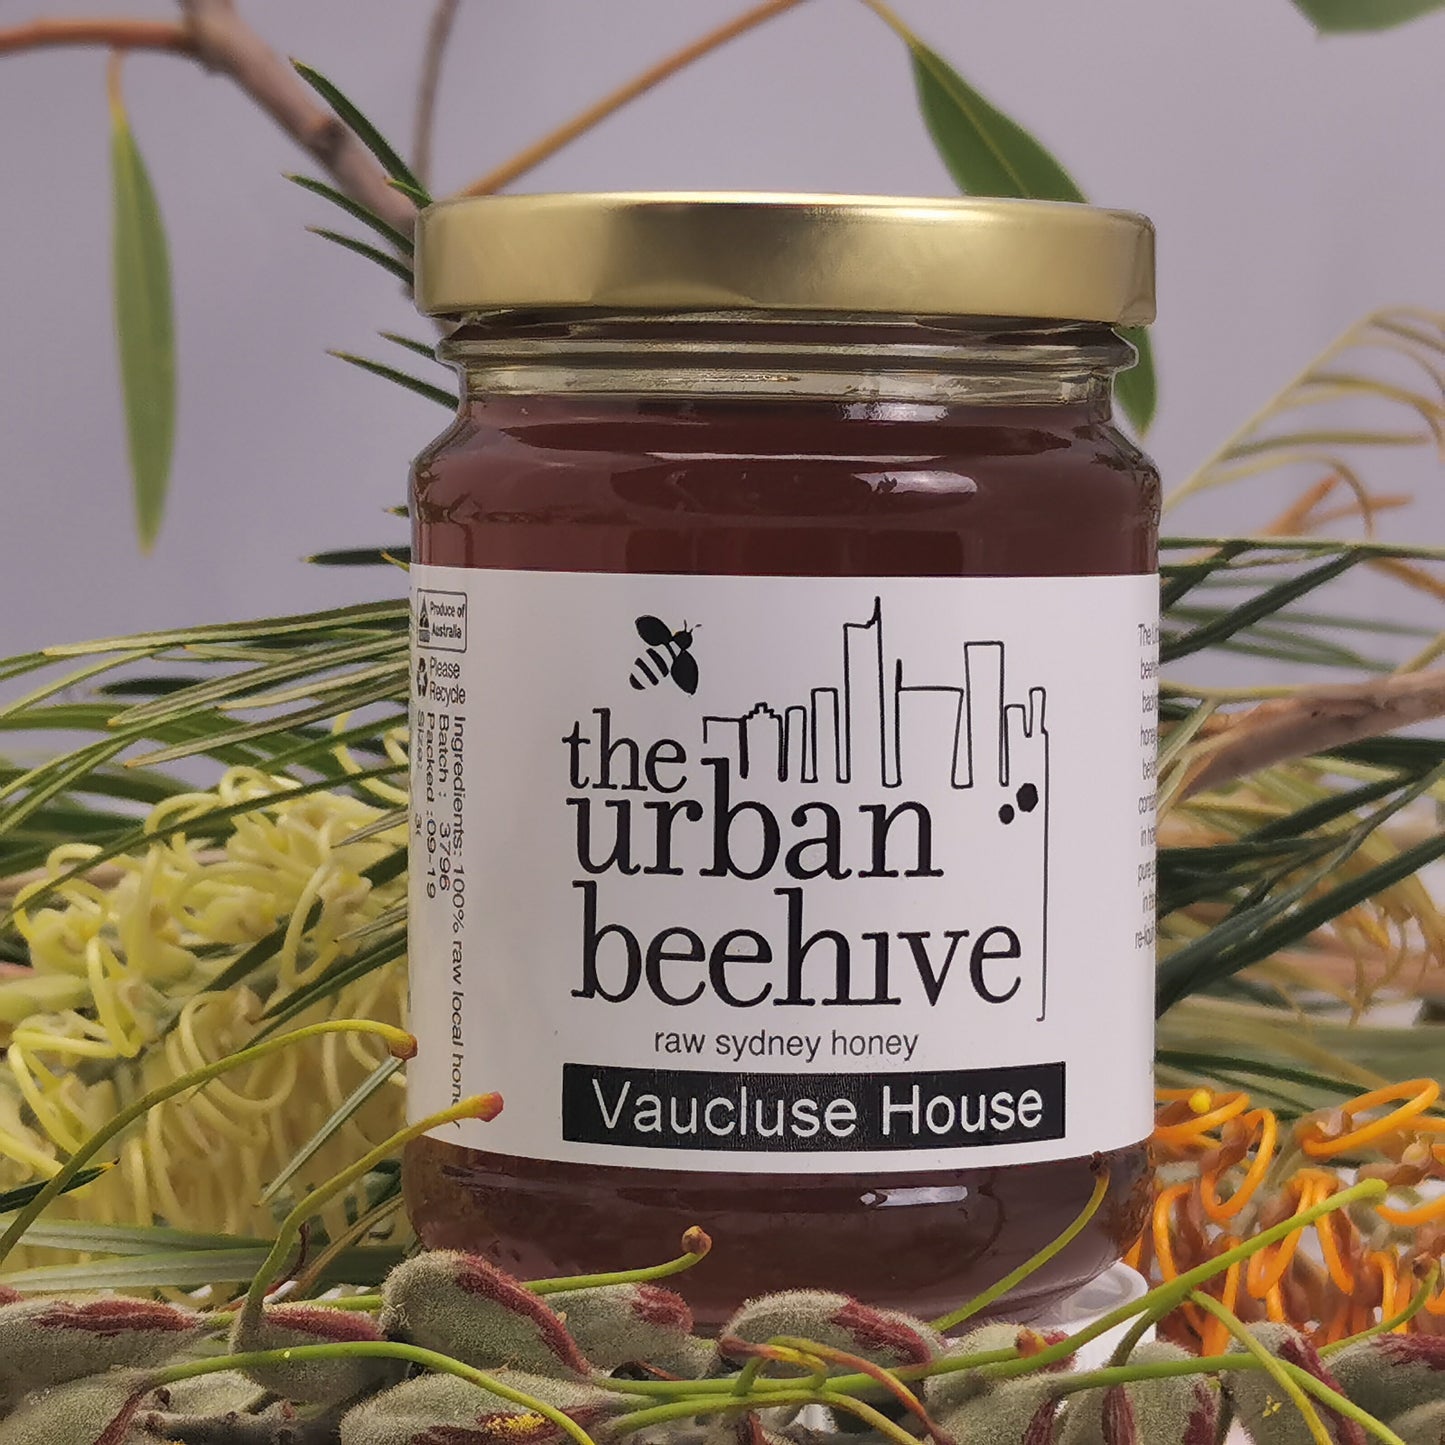 Vaucluse House honey